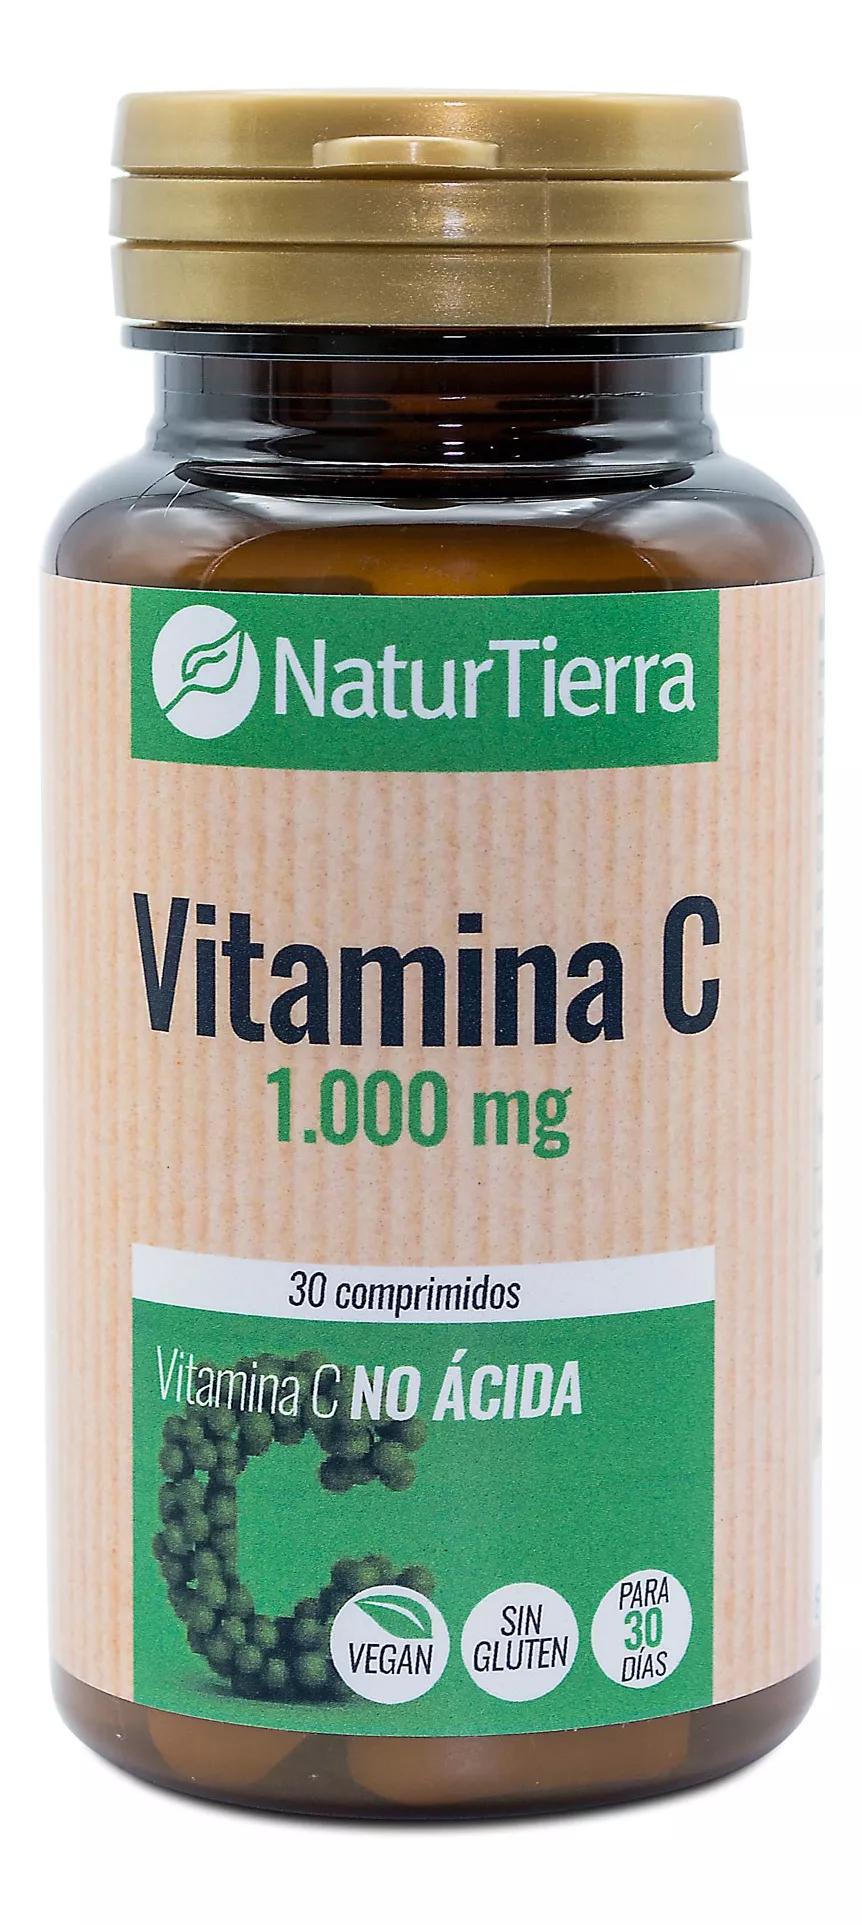 NaturTierra Vitamina C 30 Comprimidos